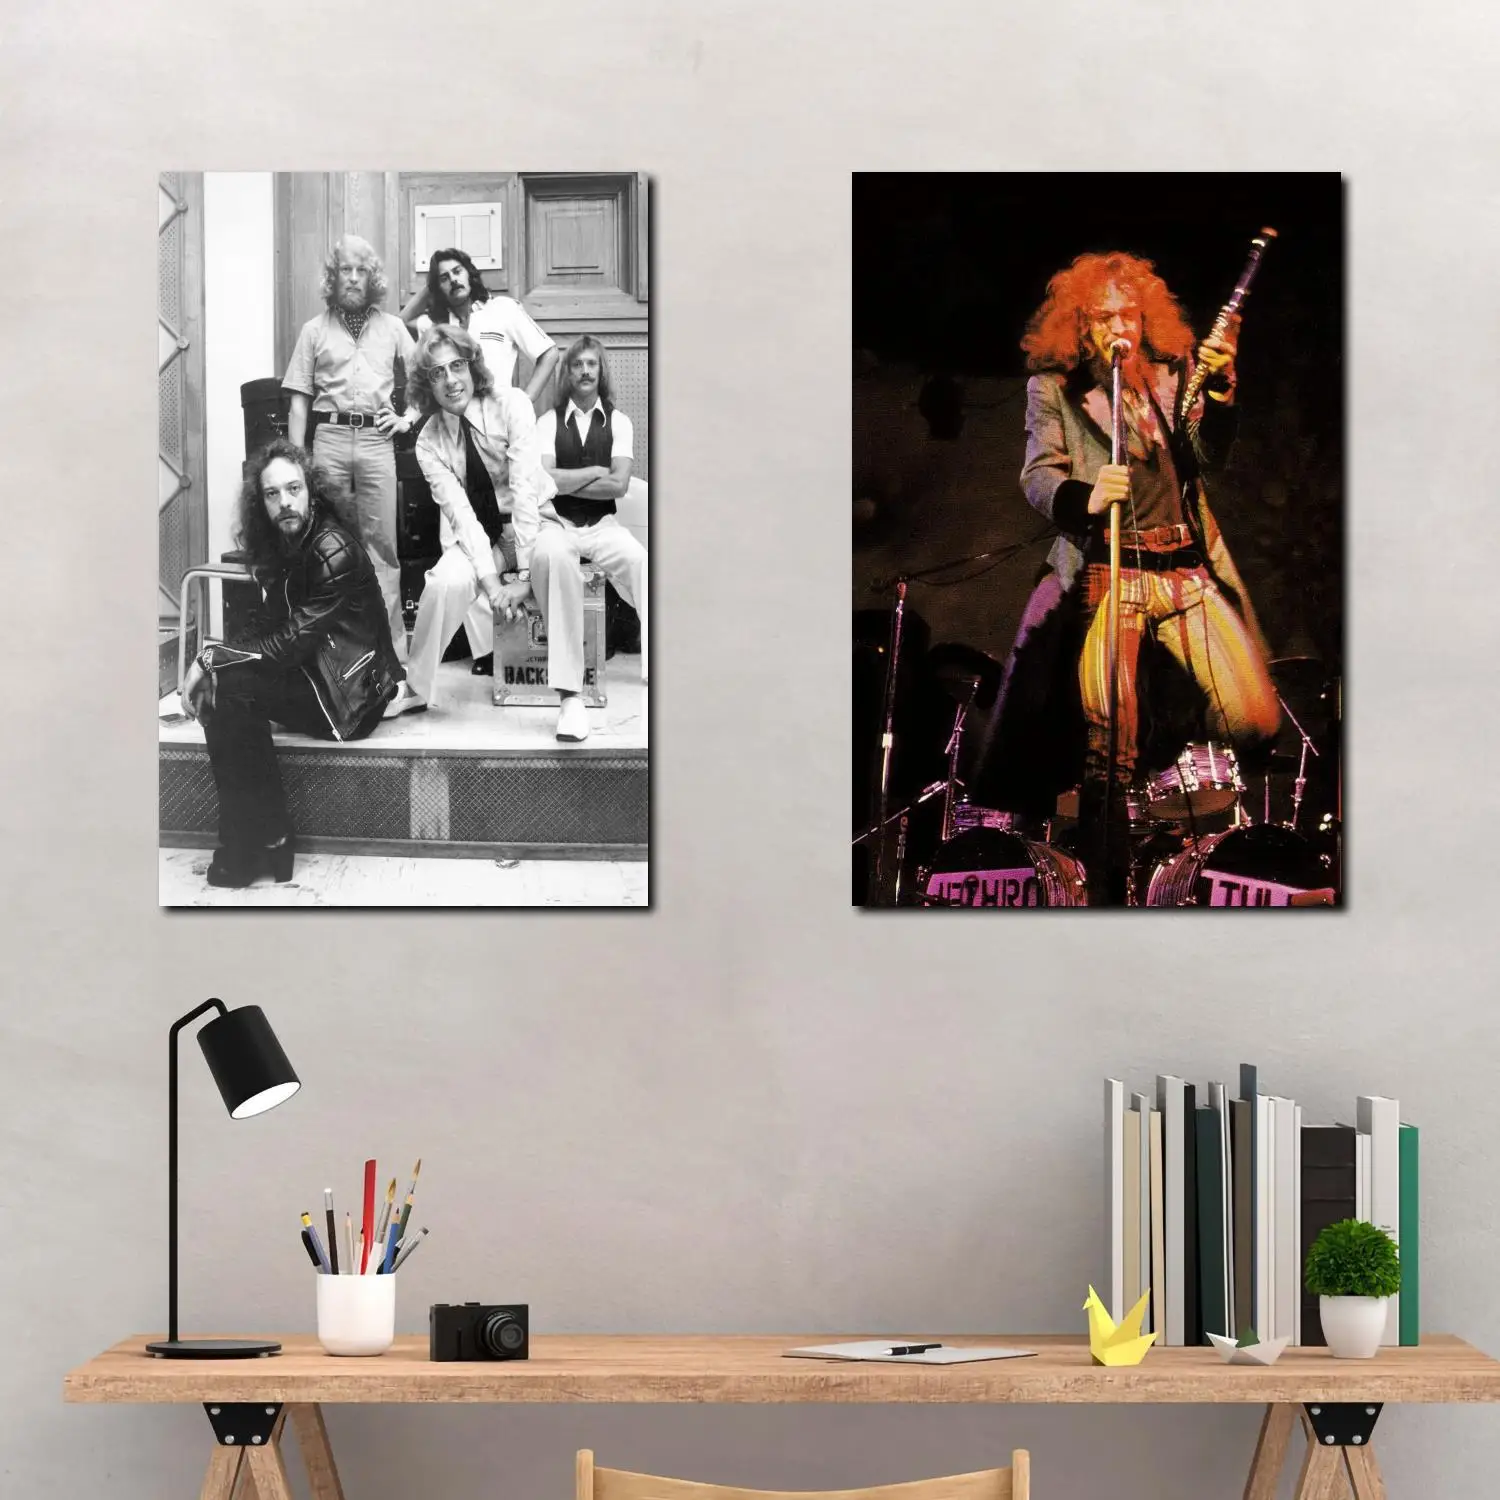 

Jethro Tull певец холст художественный плакат и настенный художественный принт современная семейная Спальня Декор плакаты